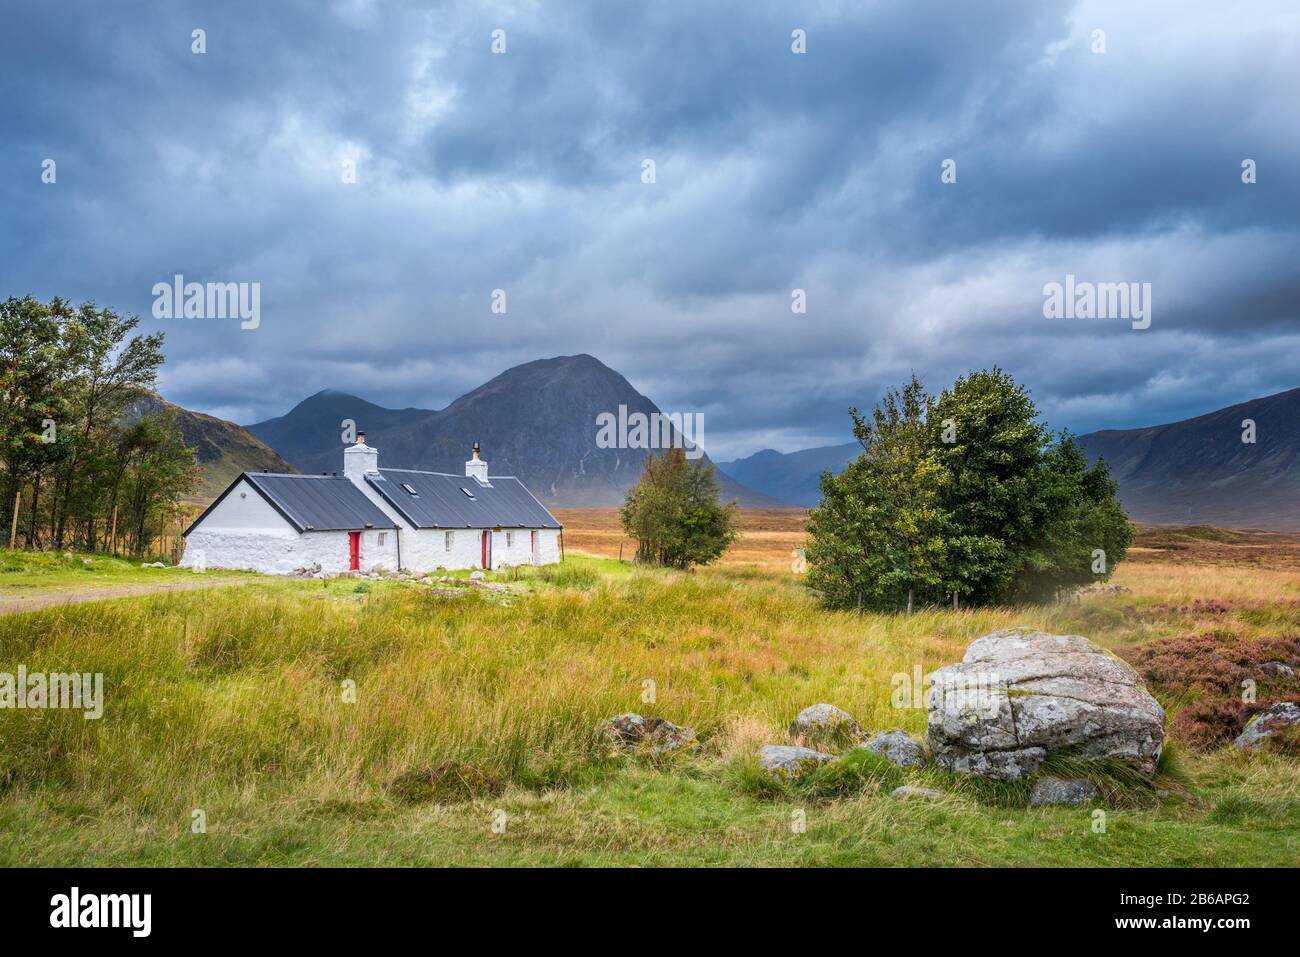 Blackrock Cottage under stormy skies with mountains in the background. Glencoe, Scottish Highlands, United Kingdom Stock Photo